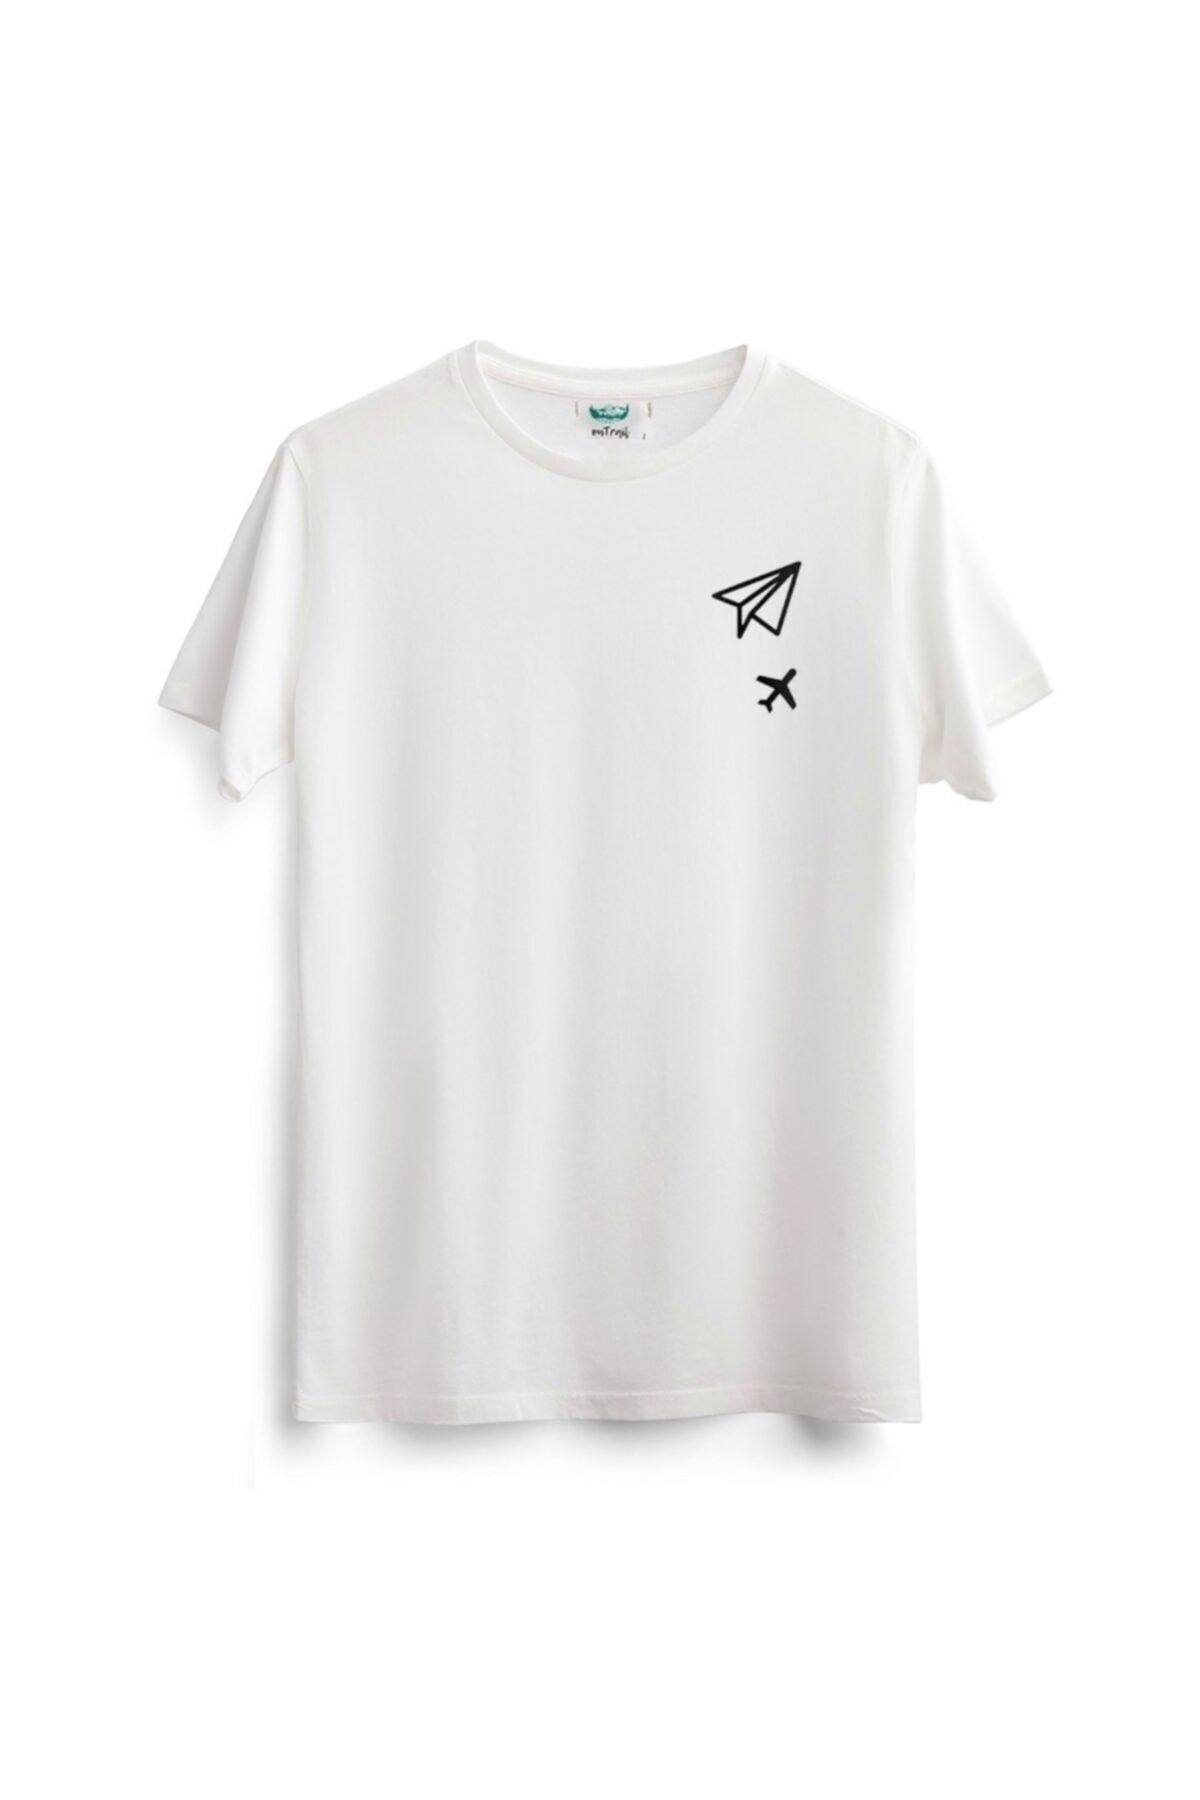 Outrail Unisex Beyaz Tasarım T-shirt